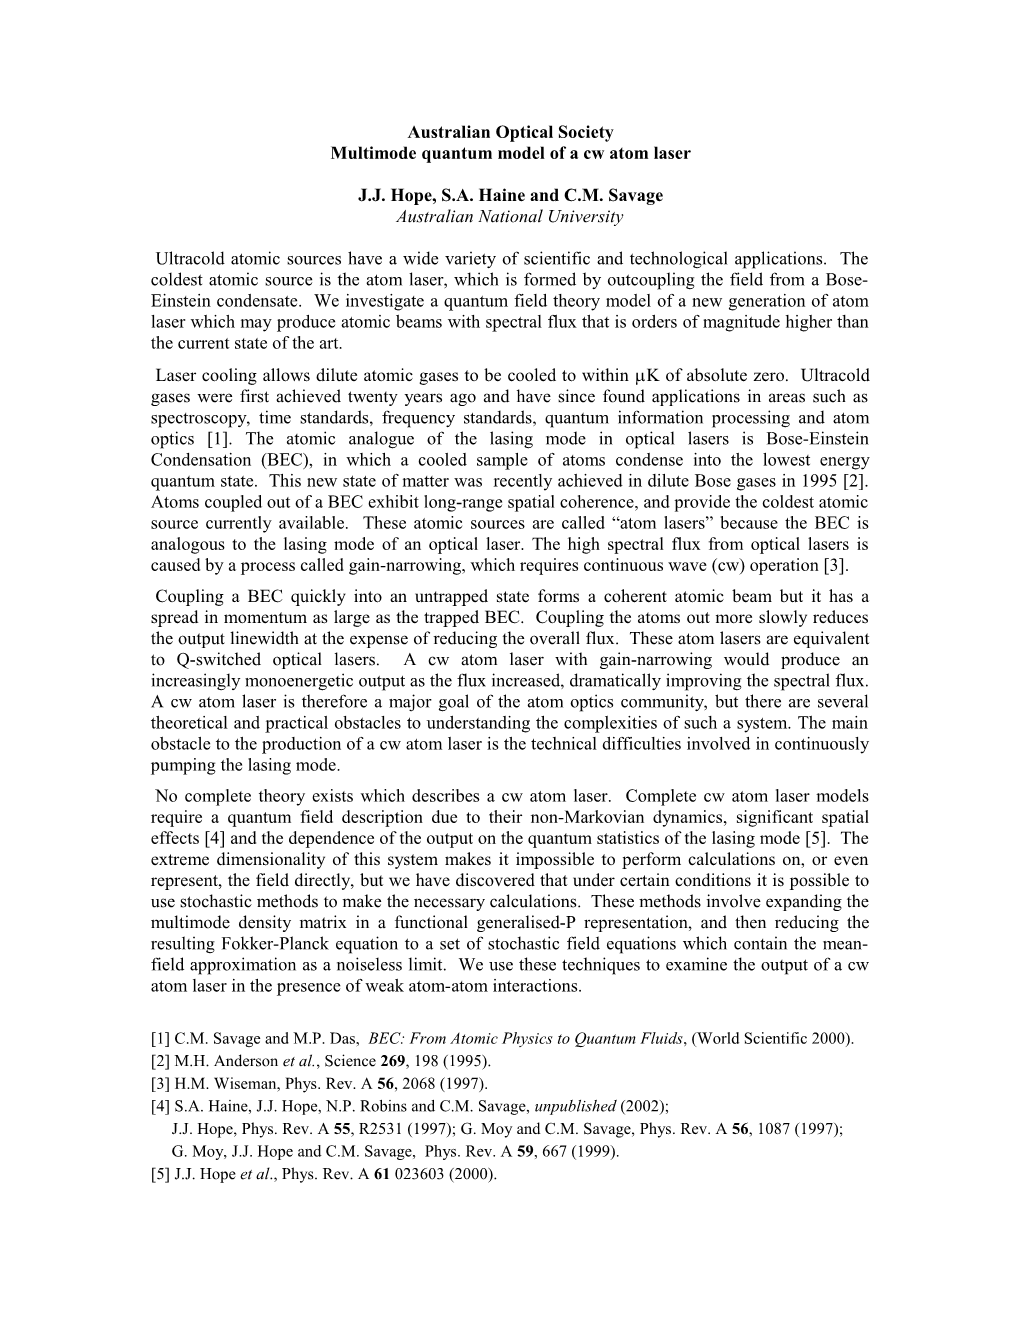 Stochastic Field Description of Photoassociation of a Bose-Einstein Condensate